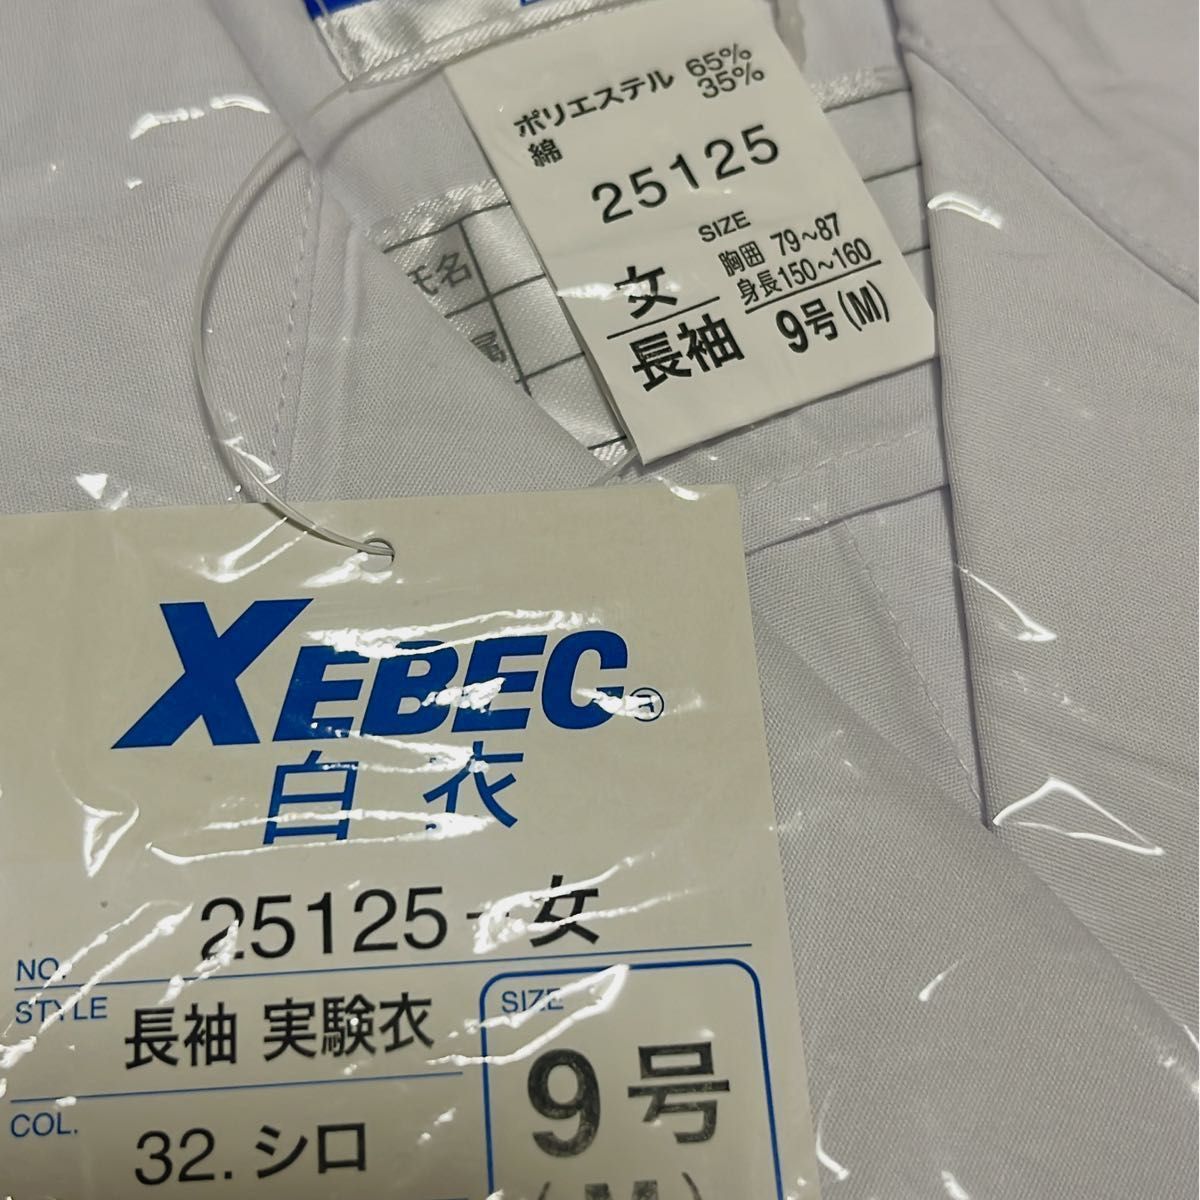 XEBEC ジーベック 白衣 25125 実験衣